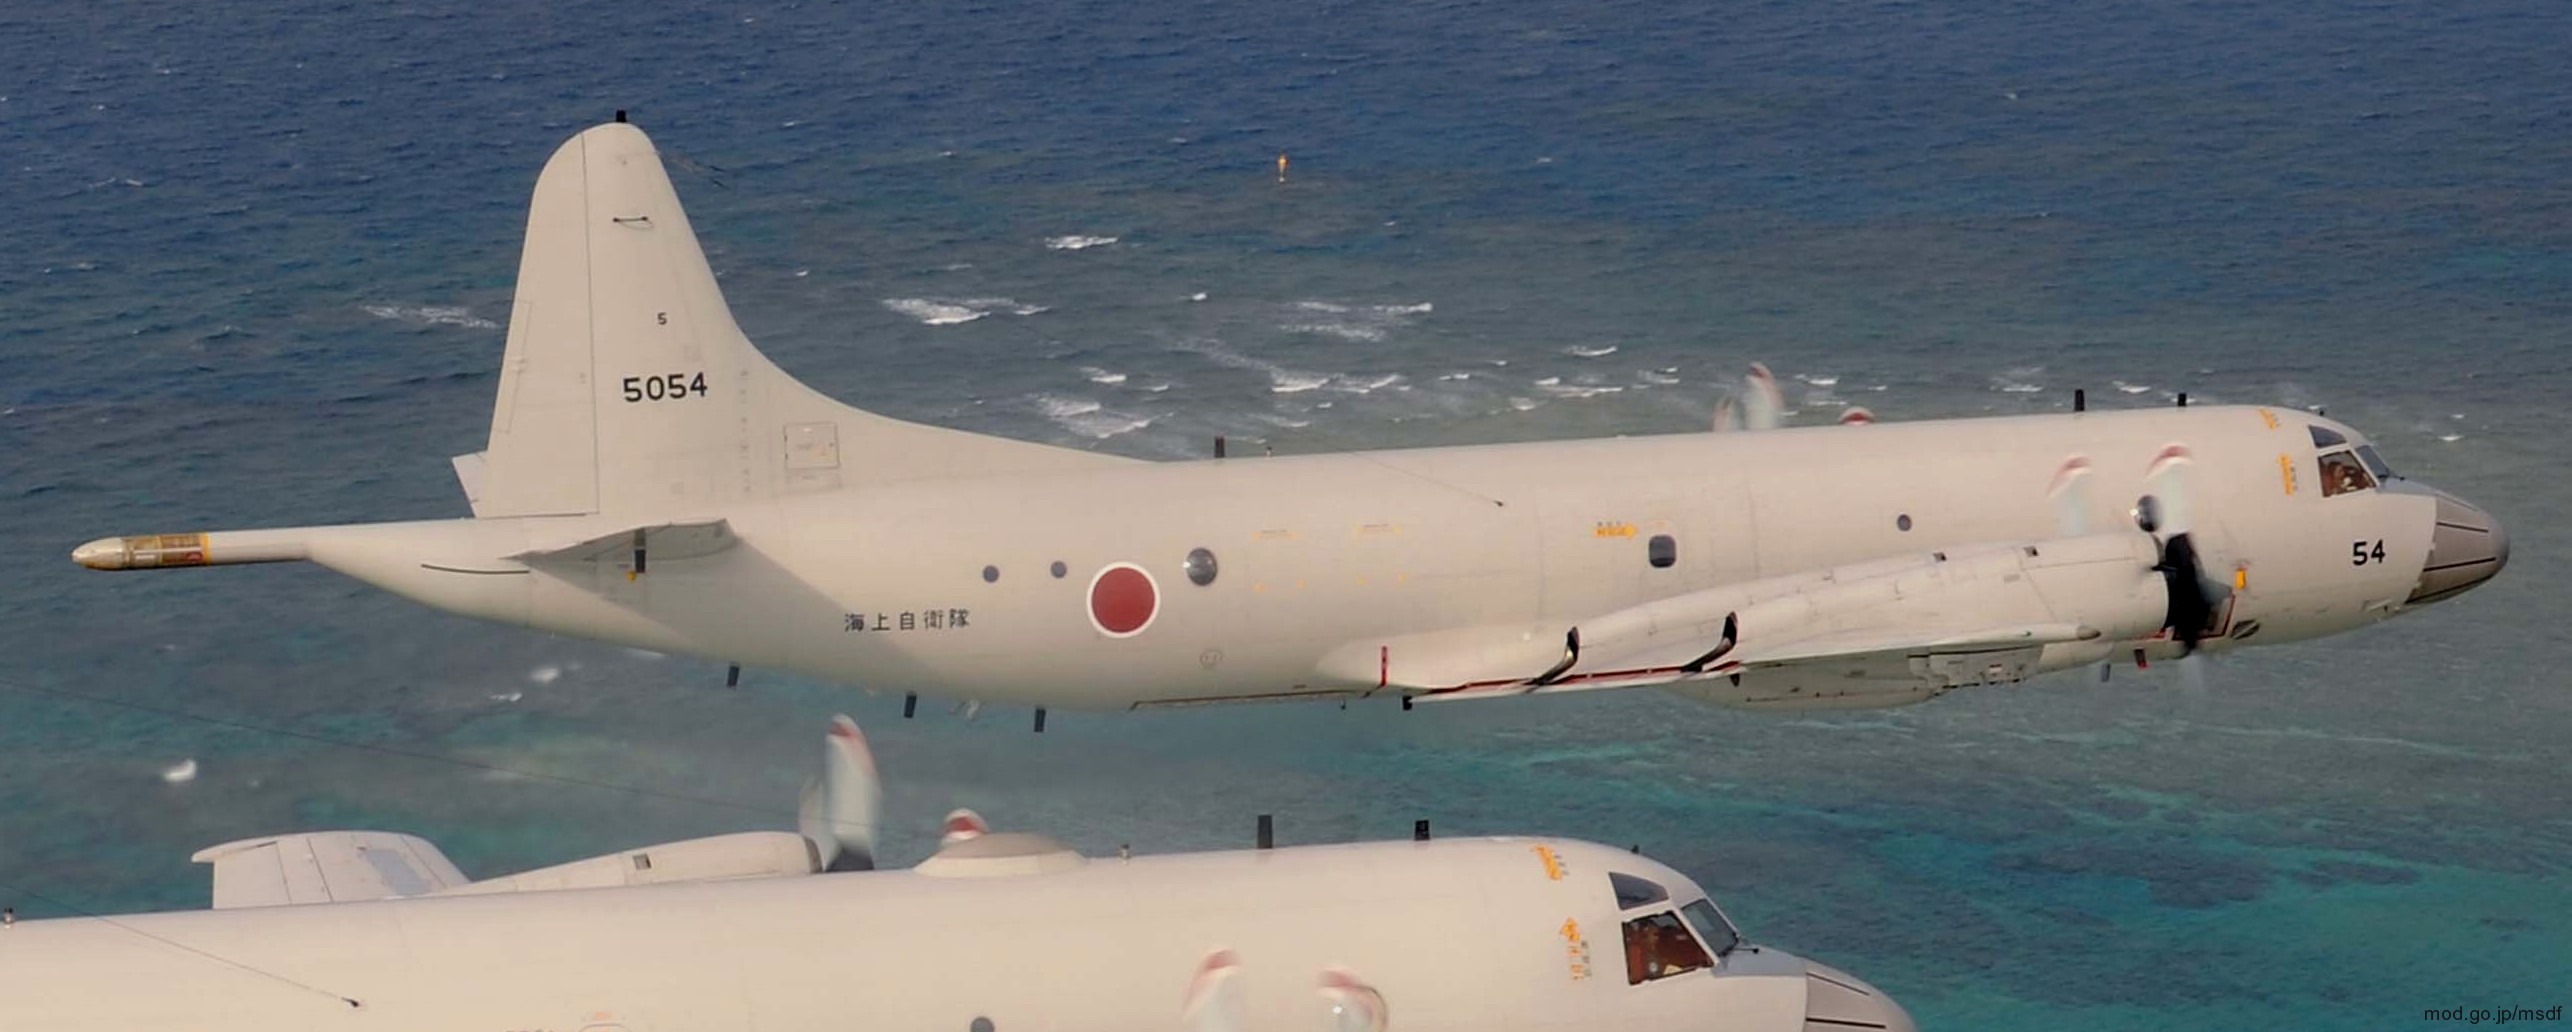 kawasaki p-3c orion patrol aircraft mpa japan maritime self defense force jmsdf 5054 02